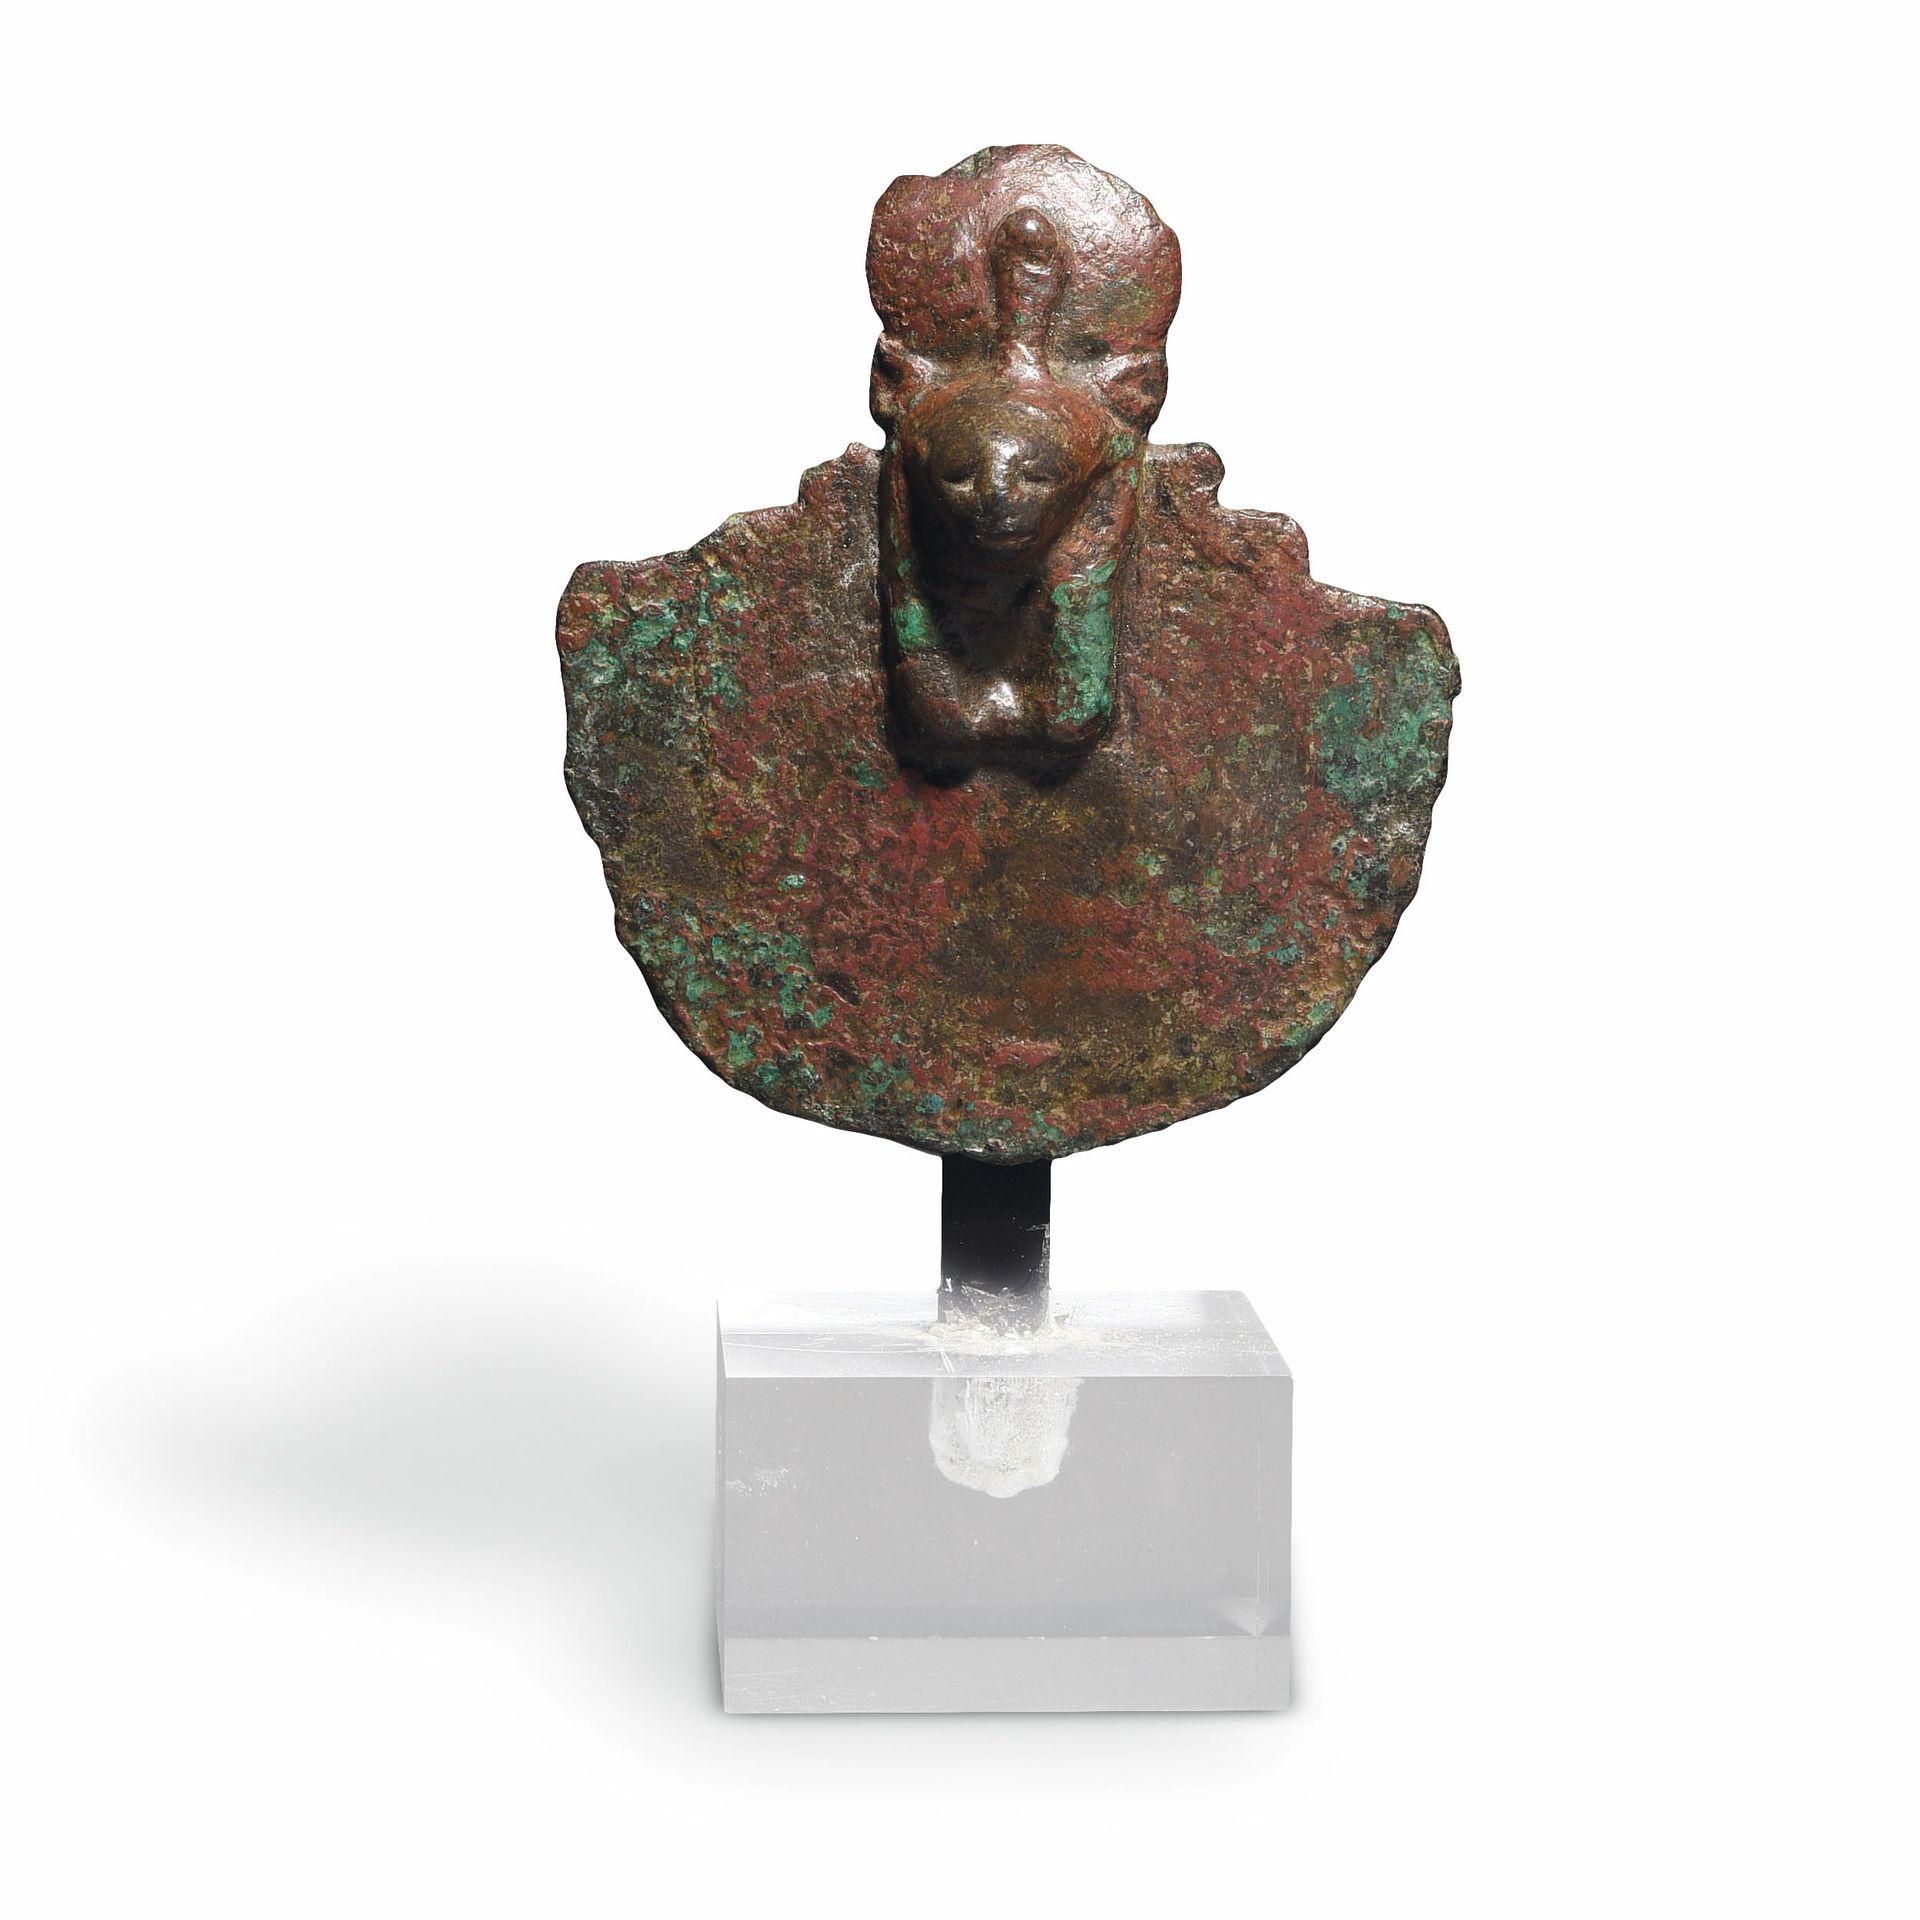 Null EGIDA DI SEKHMET

Egitto, Periodo Tardo, 664-332 a.C. 

Bronzo con patina v&hellip;